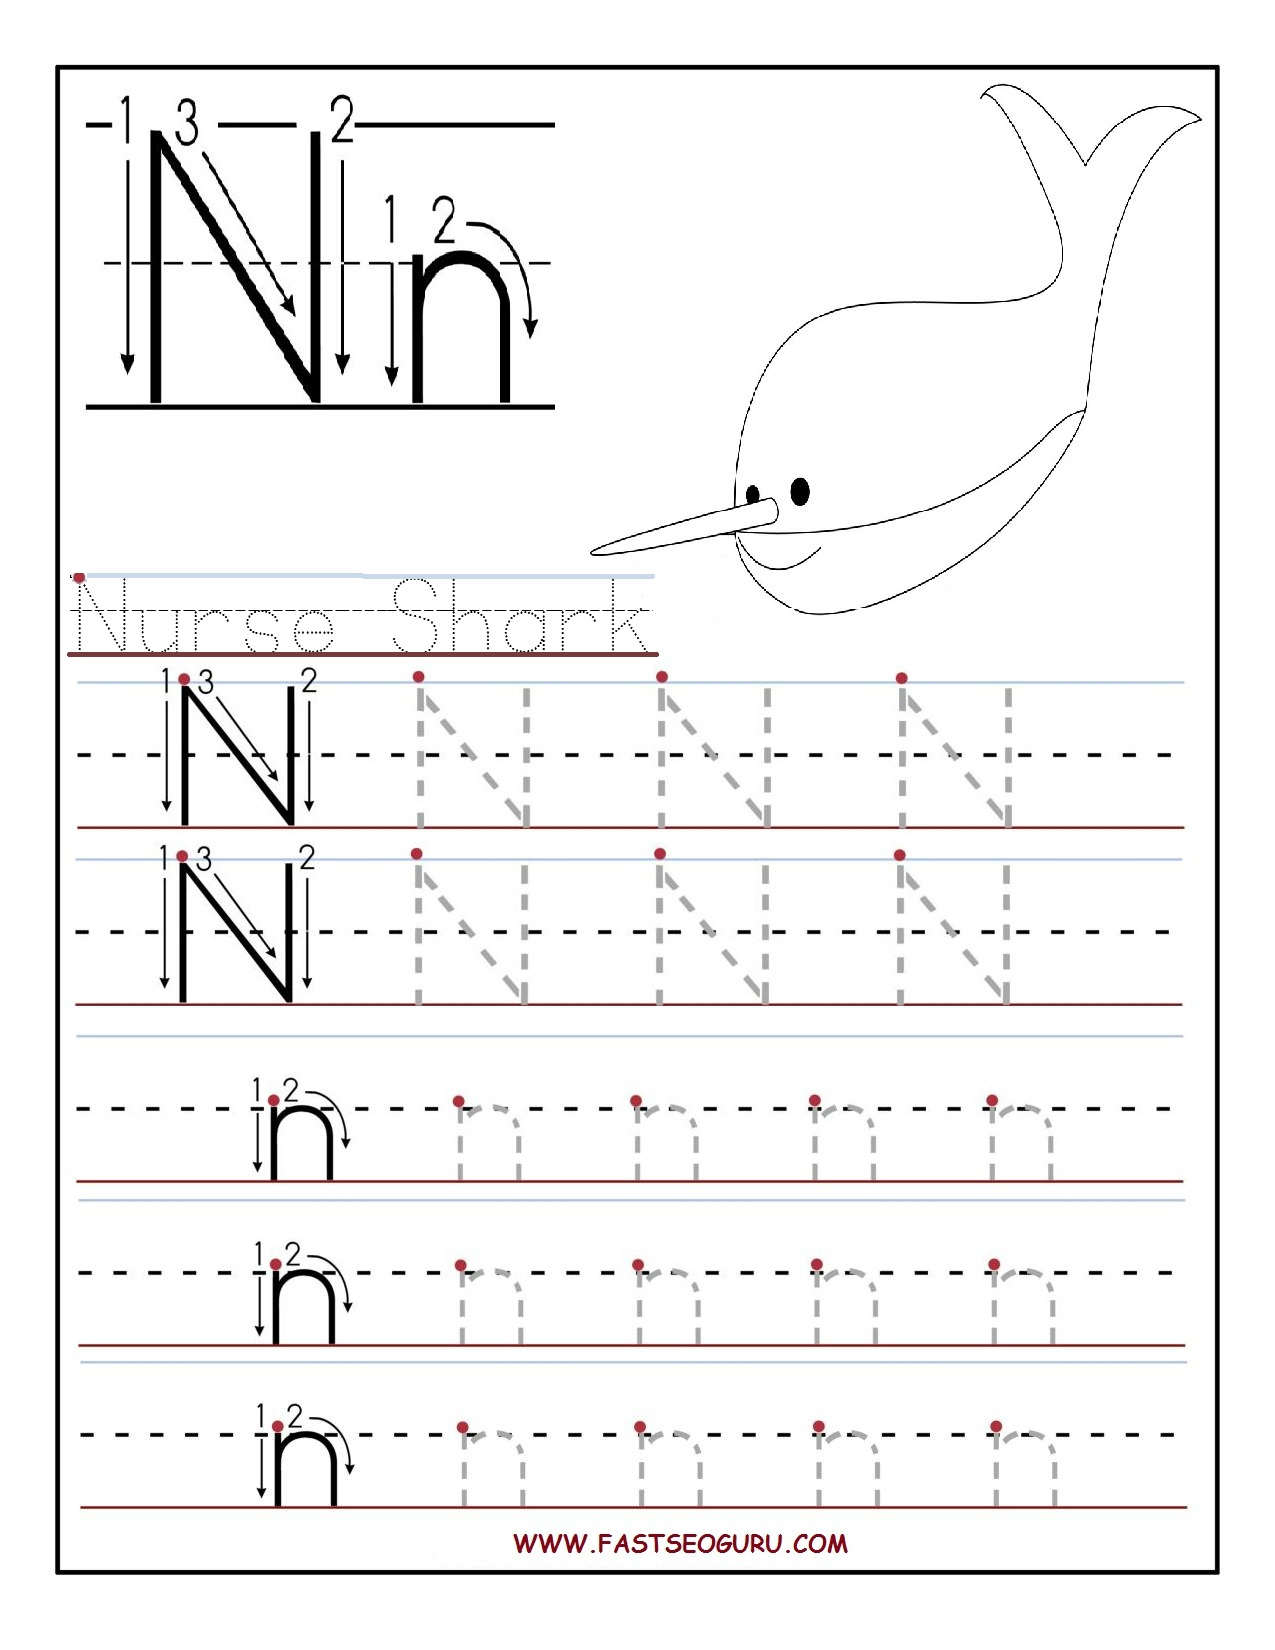 Printable Letter N Tracing Worksheets For Preschool